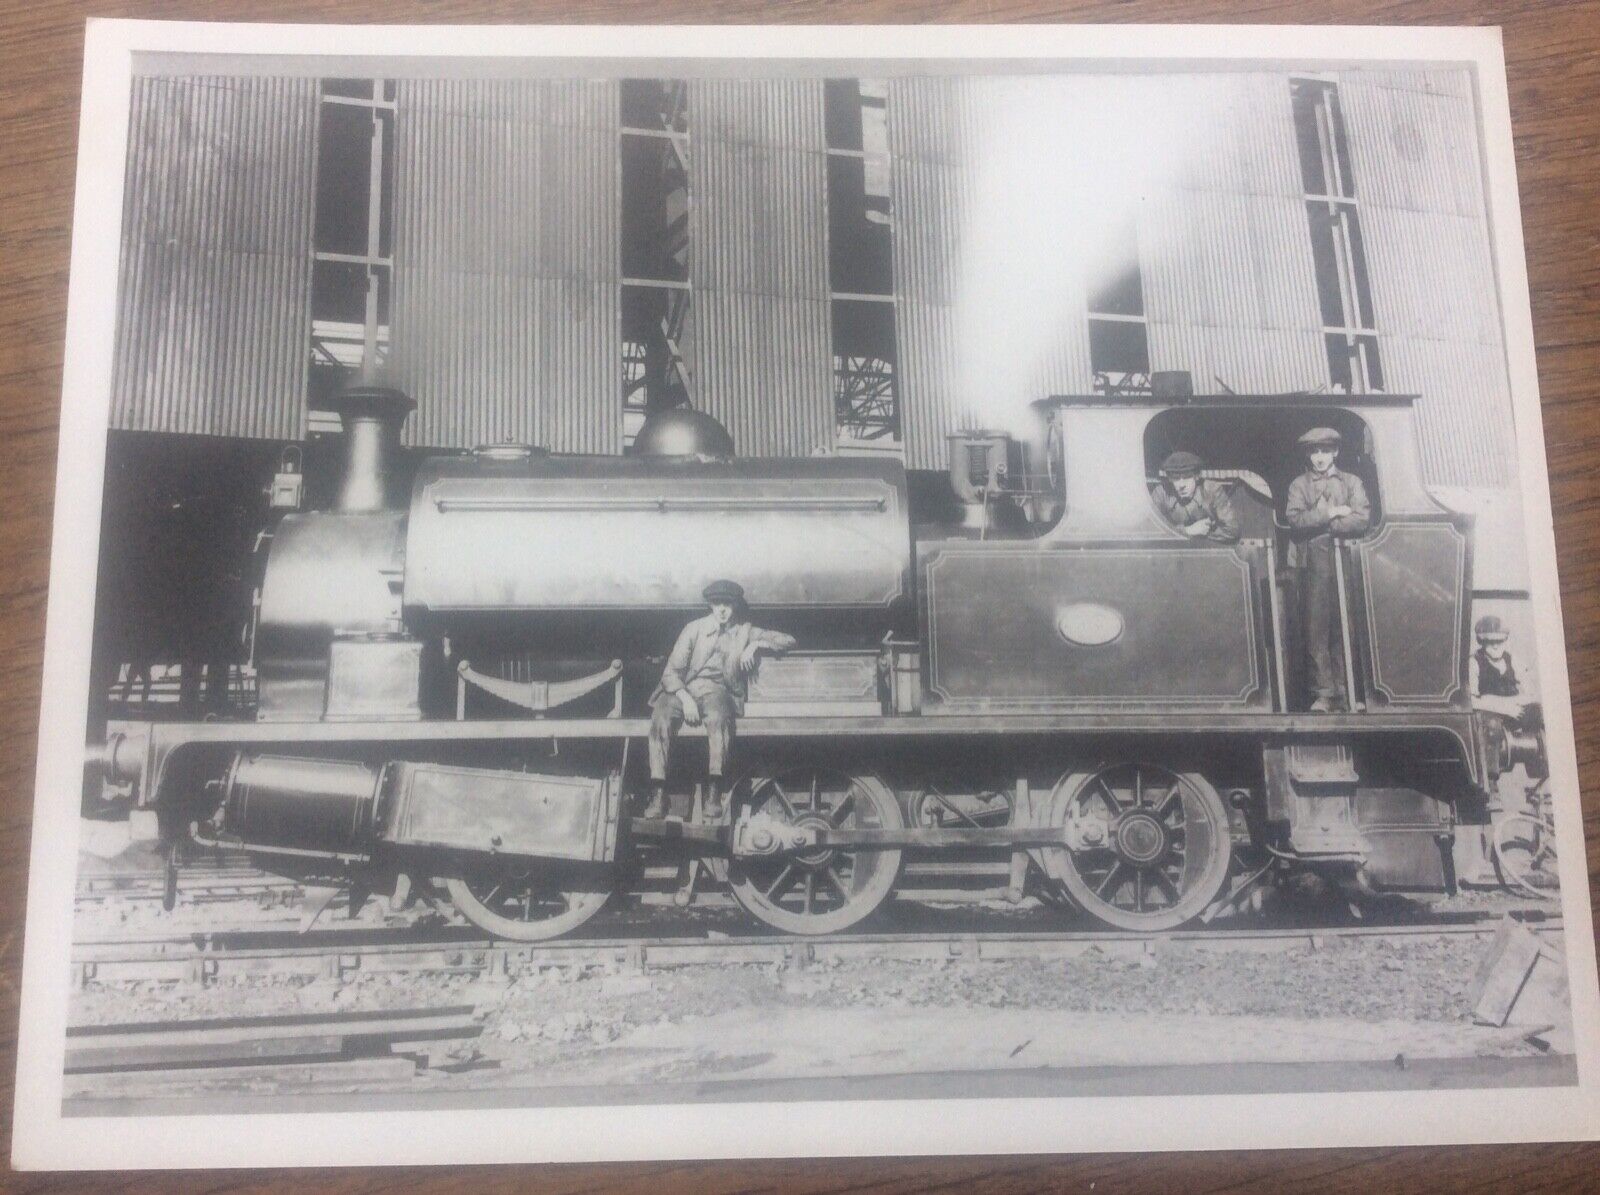 Scunthorpe British Steel Industrial Photograph Print Railway Engine Loco 8x6”